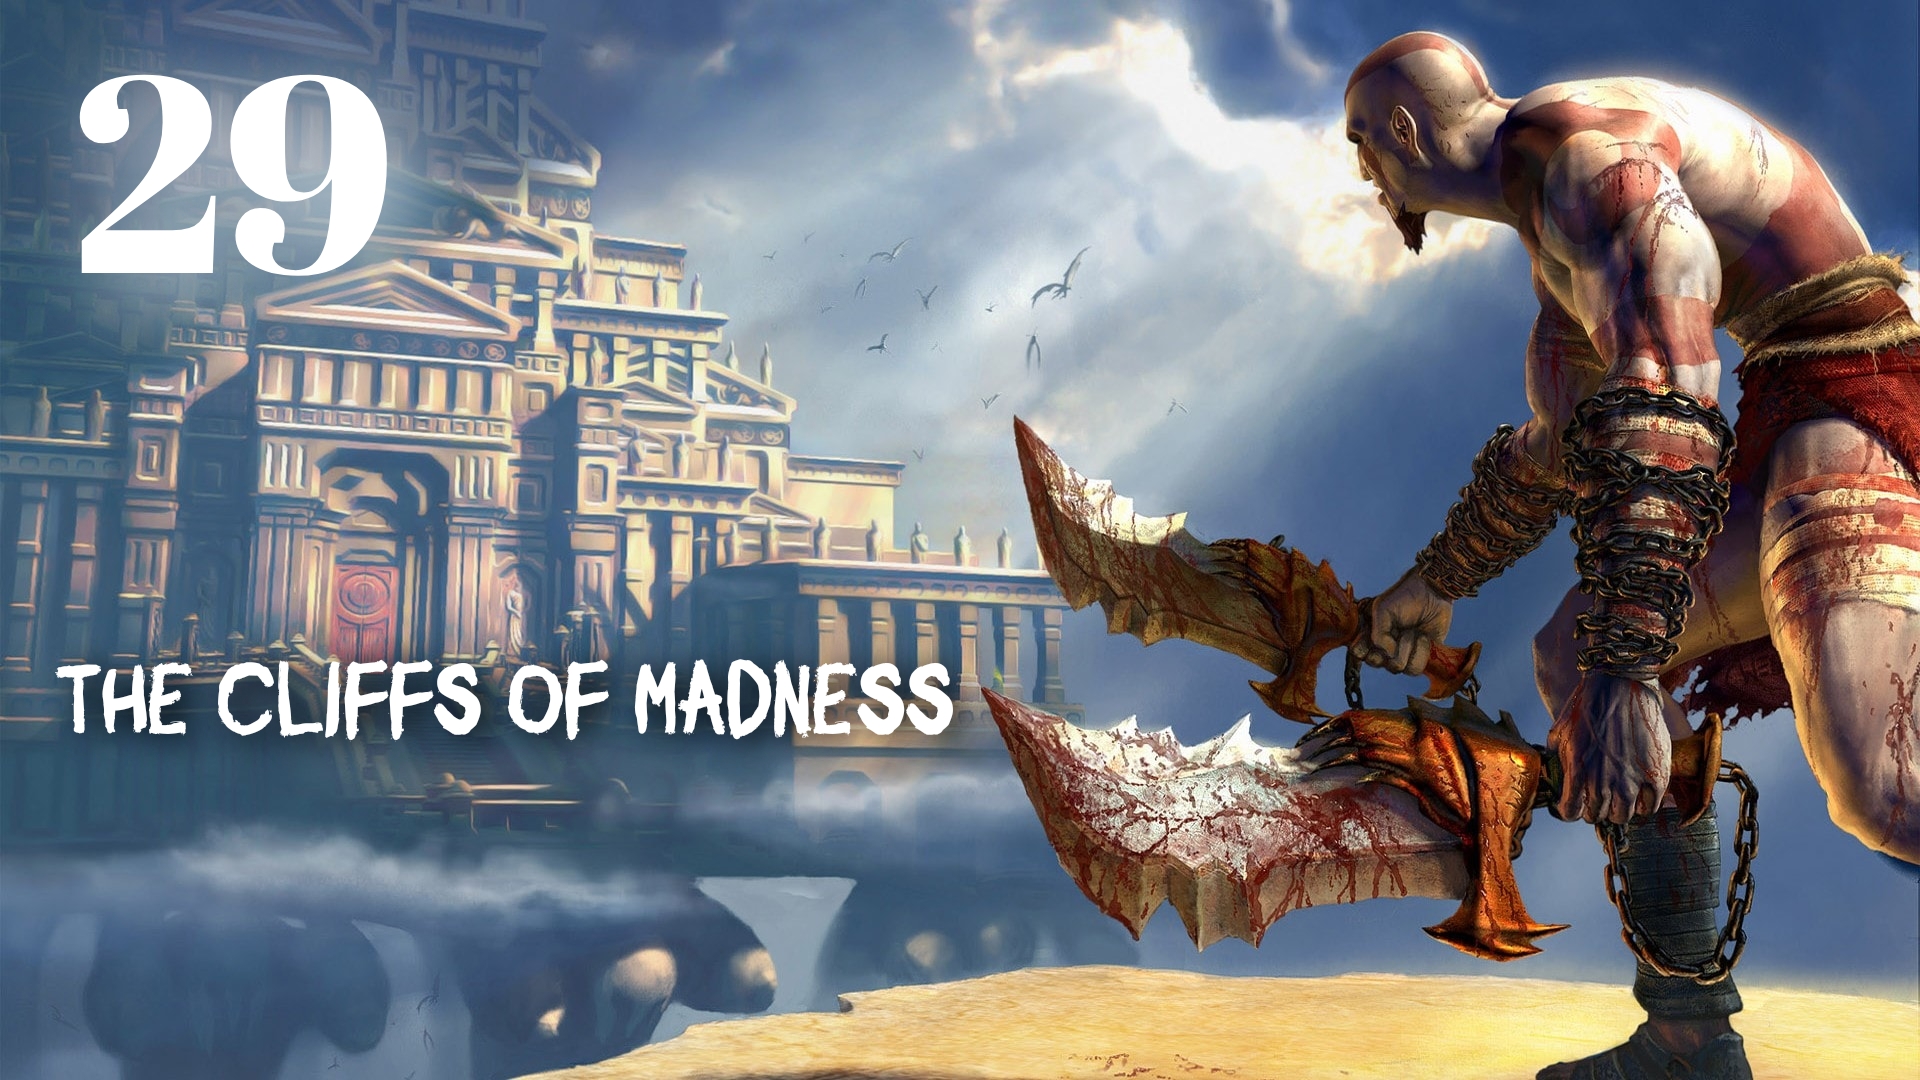 God of War HD The Cliffs of Madness